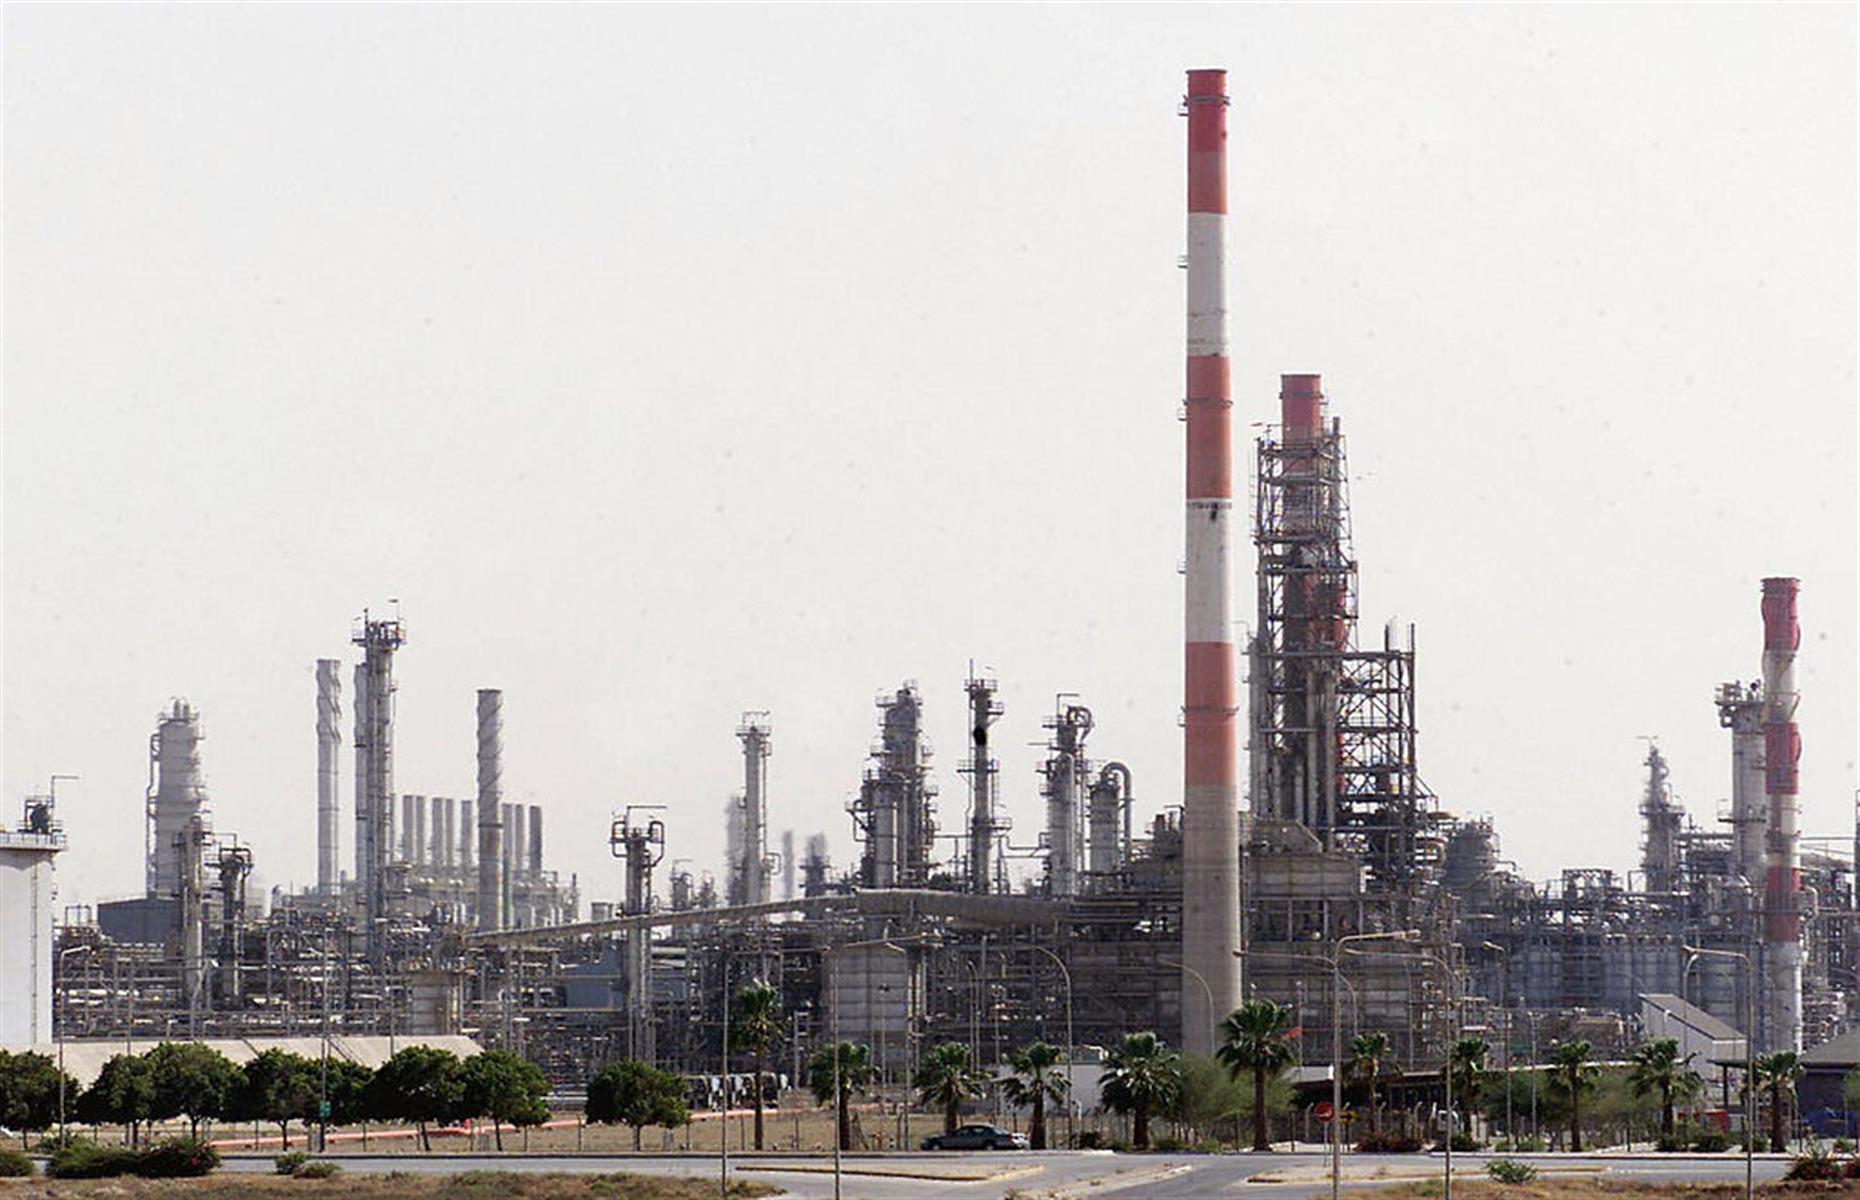 Jubail Industrial City, Saudi Arabia